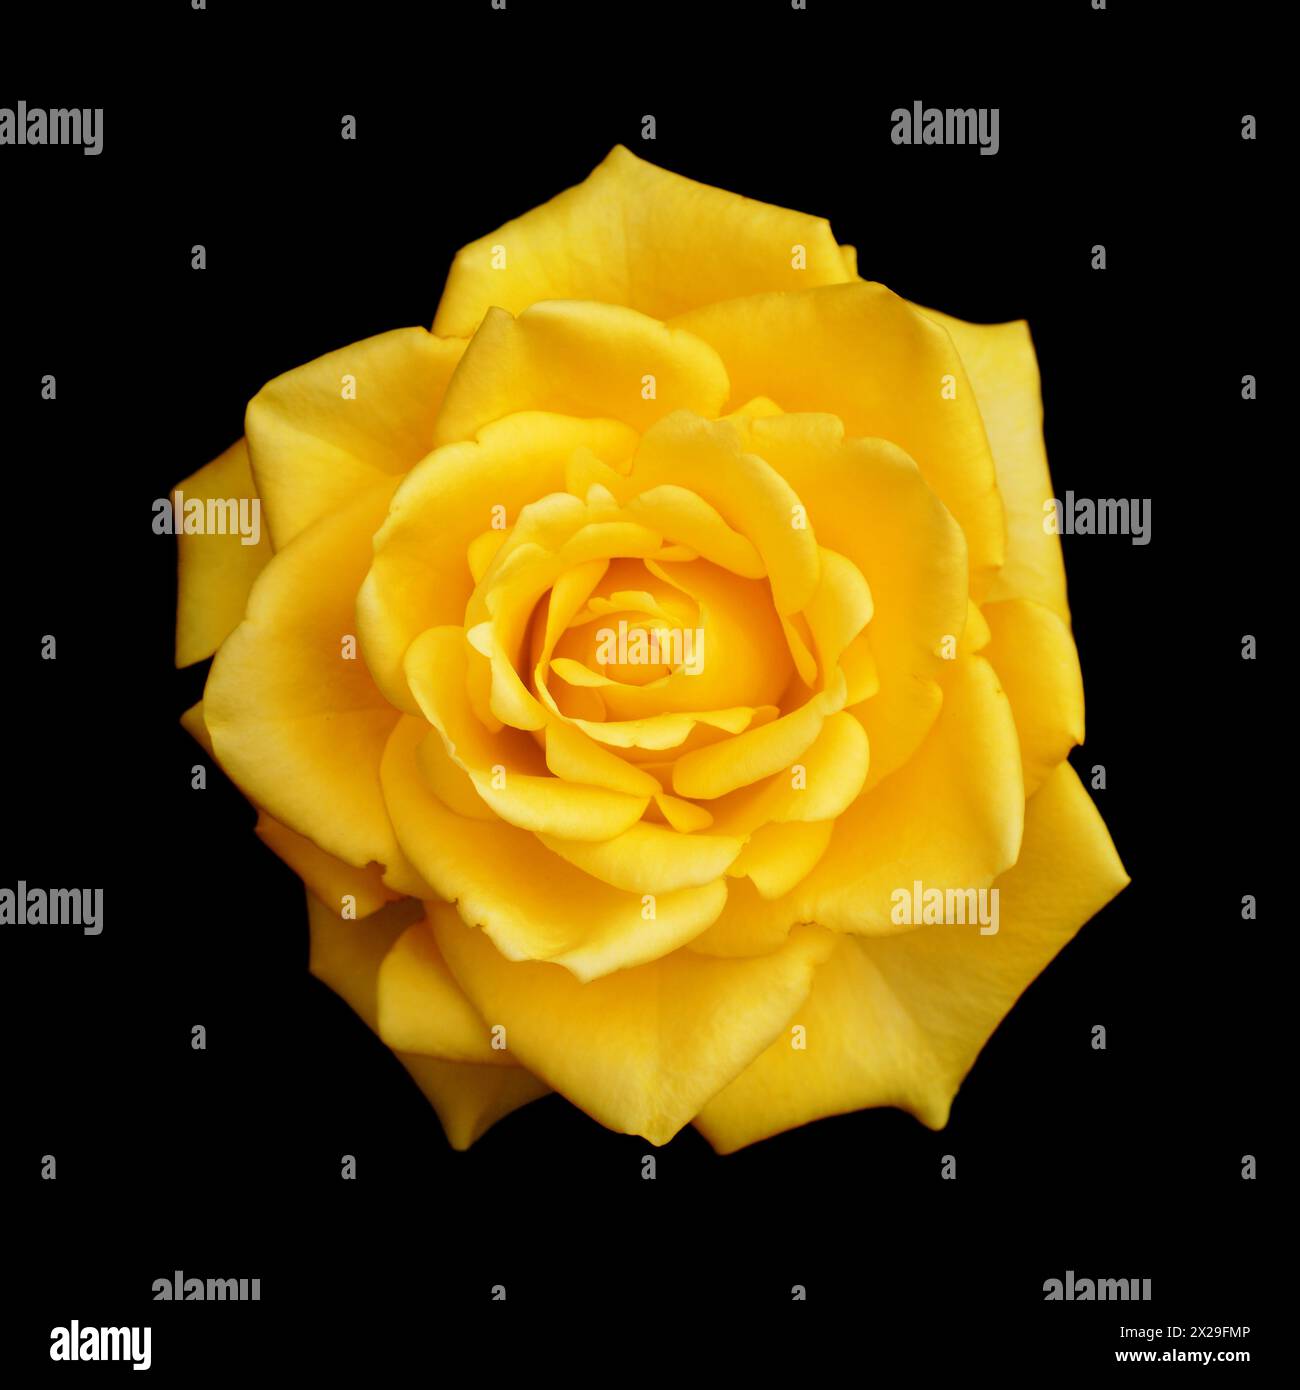 Yellow fully opened rose flower, isolated on black background Stock Photo